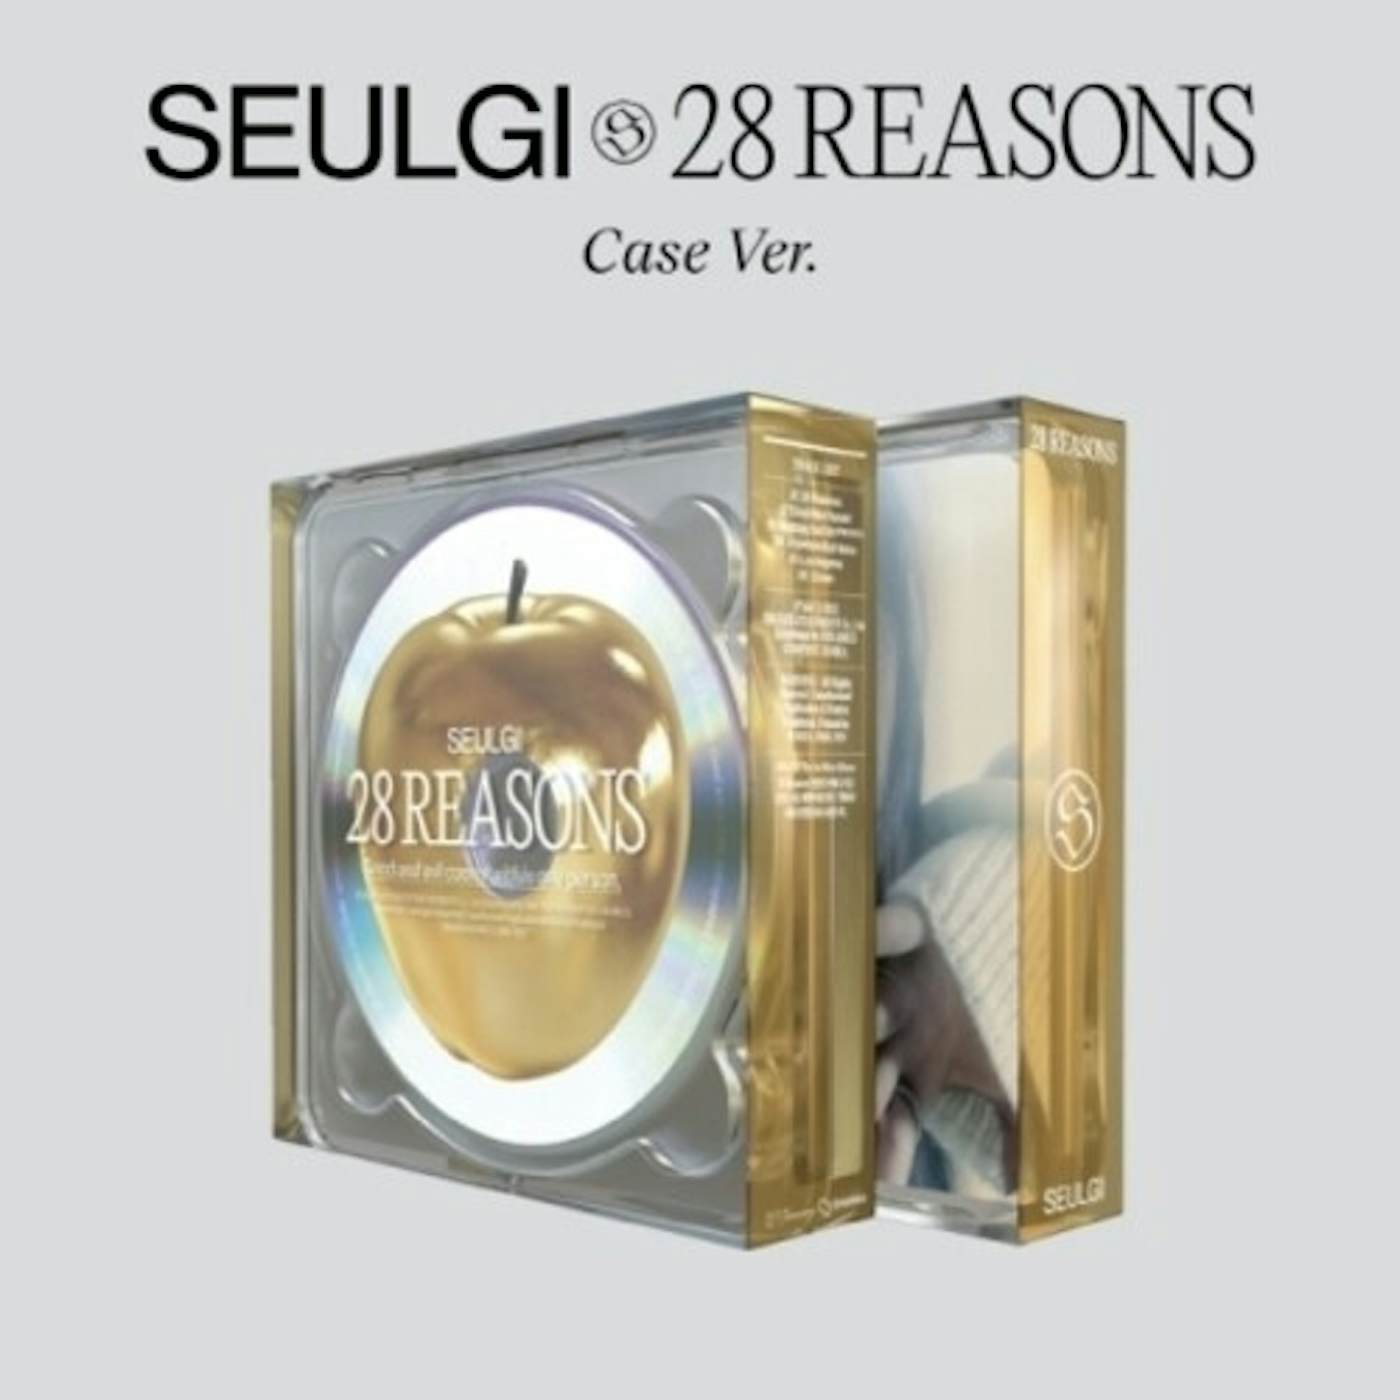 SEULGI 28 REASONS (CASE VERSION) CD